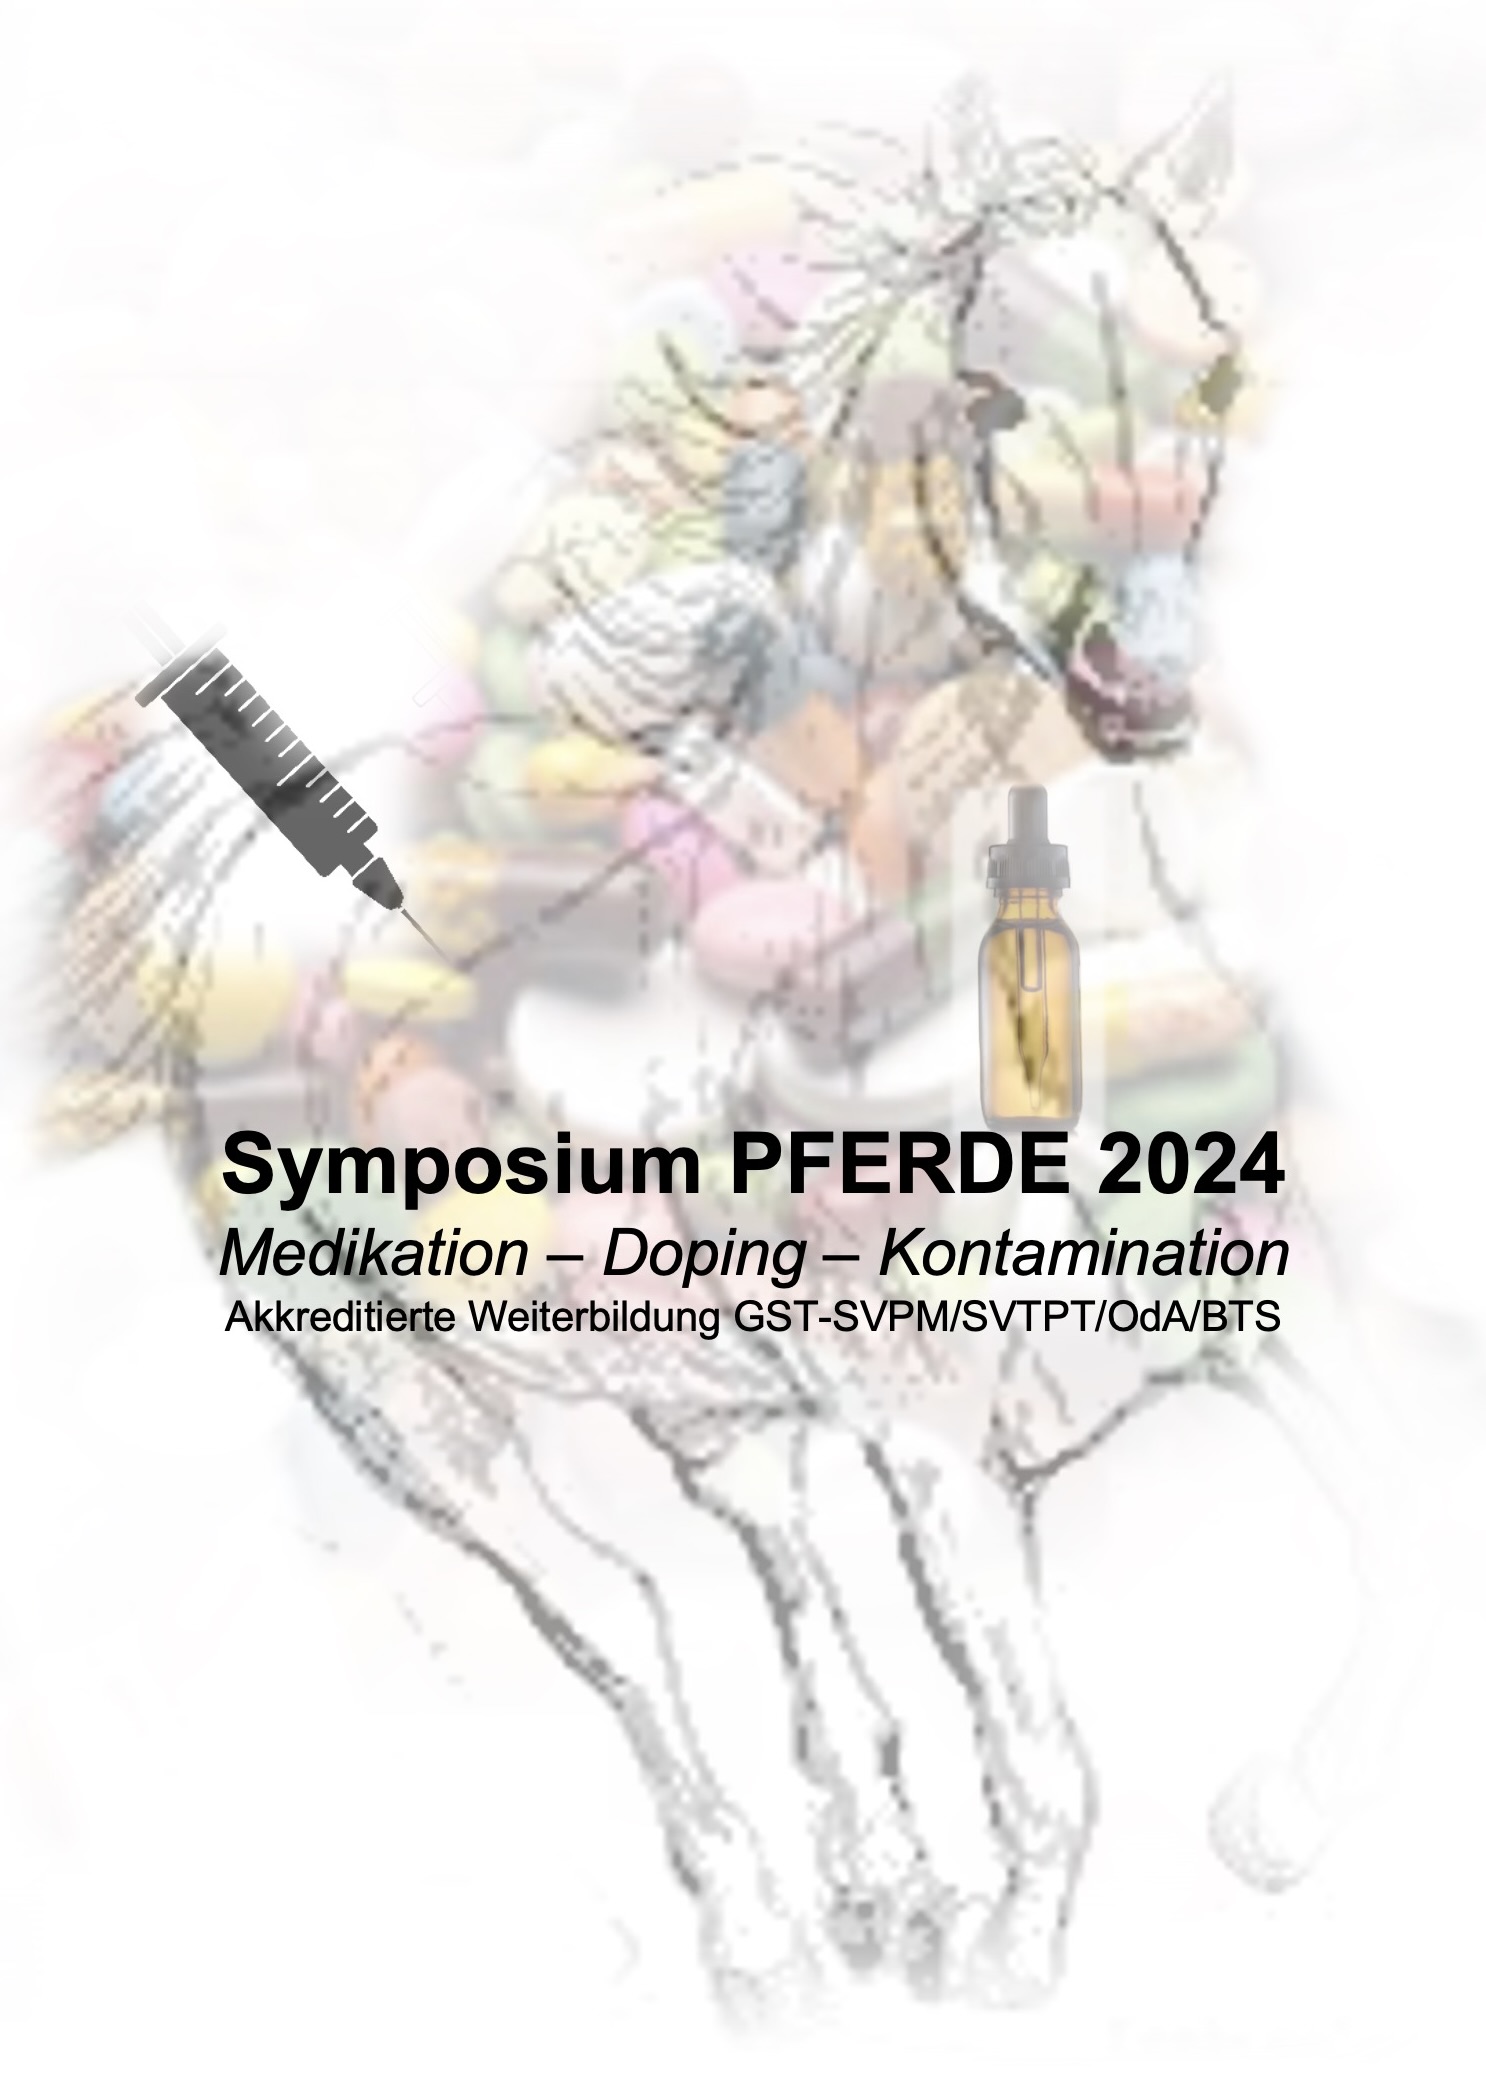 Symposium PFERDE 2024 - Medikation - Doping - Kontamination